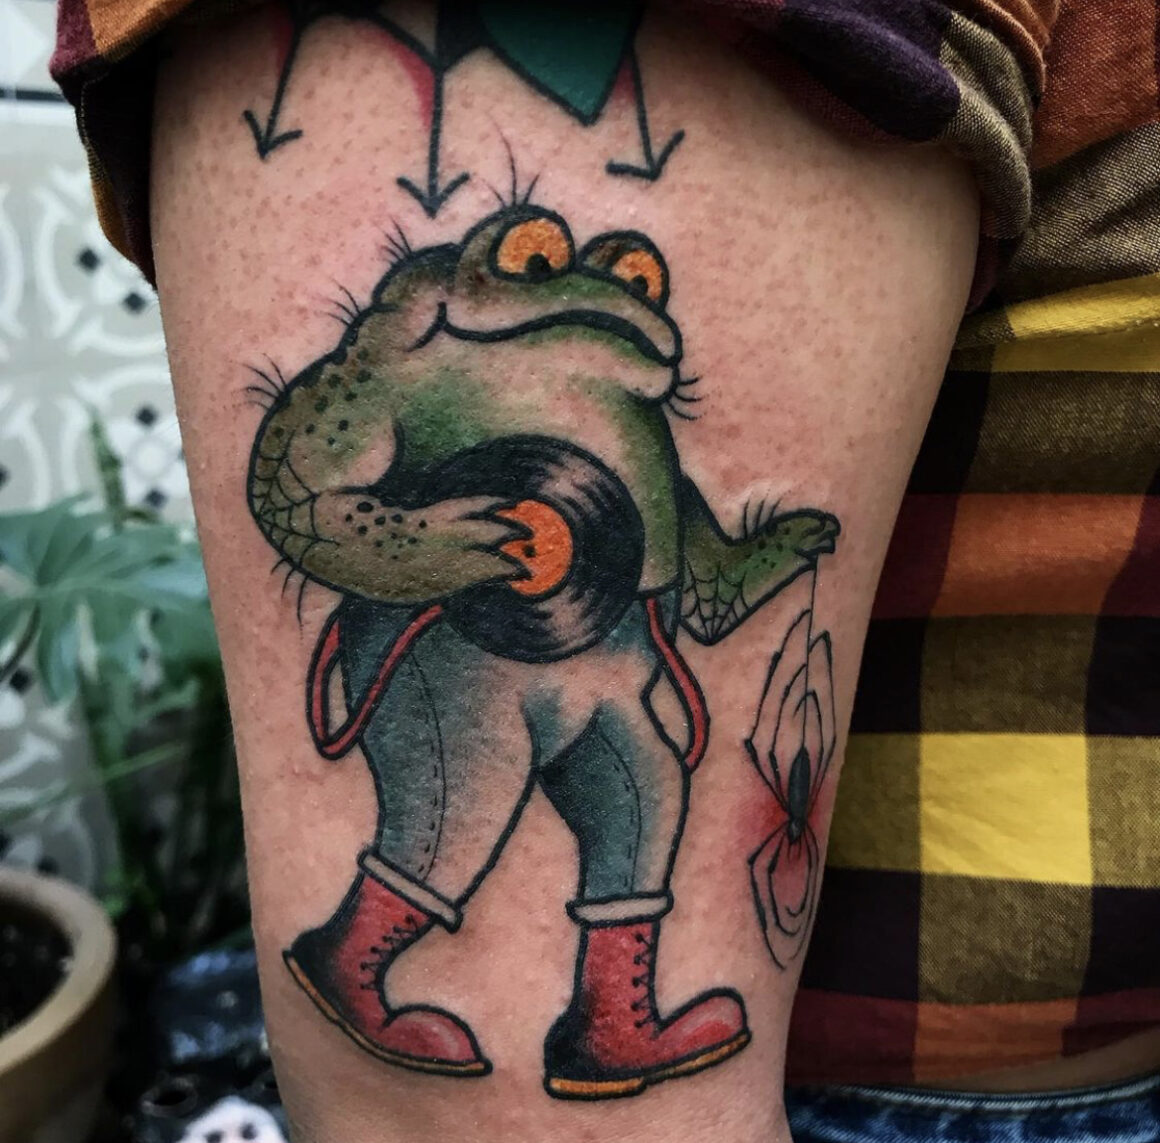 Tattoo of an iguana a symbol of vitality and wisdom 